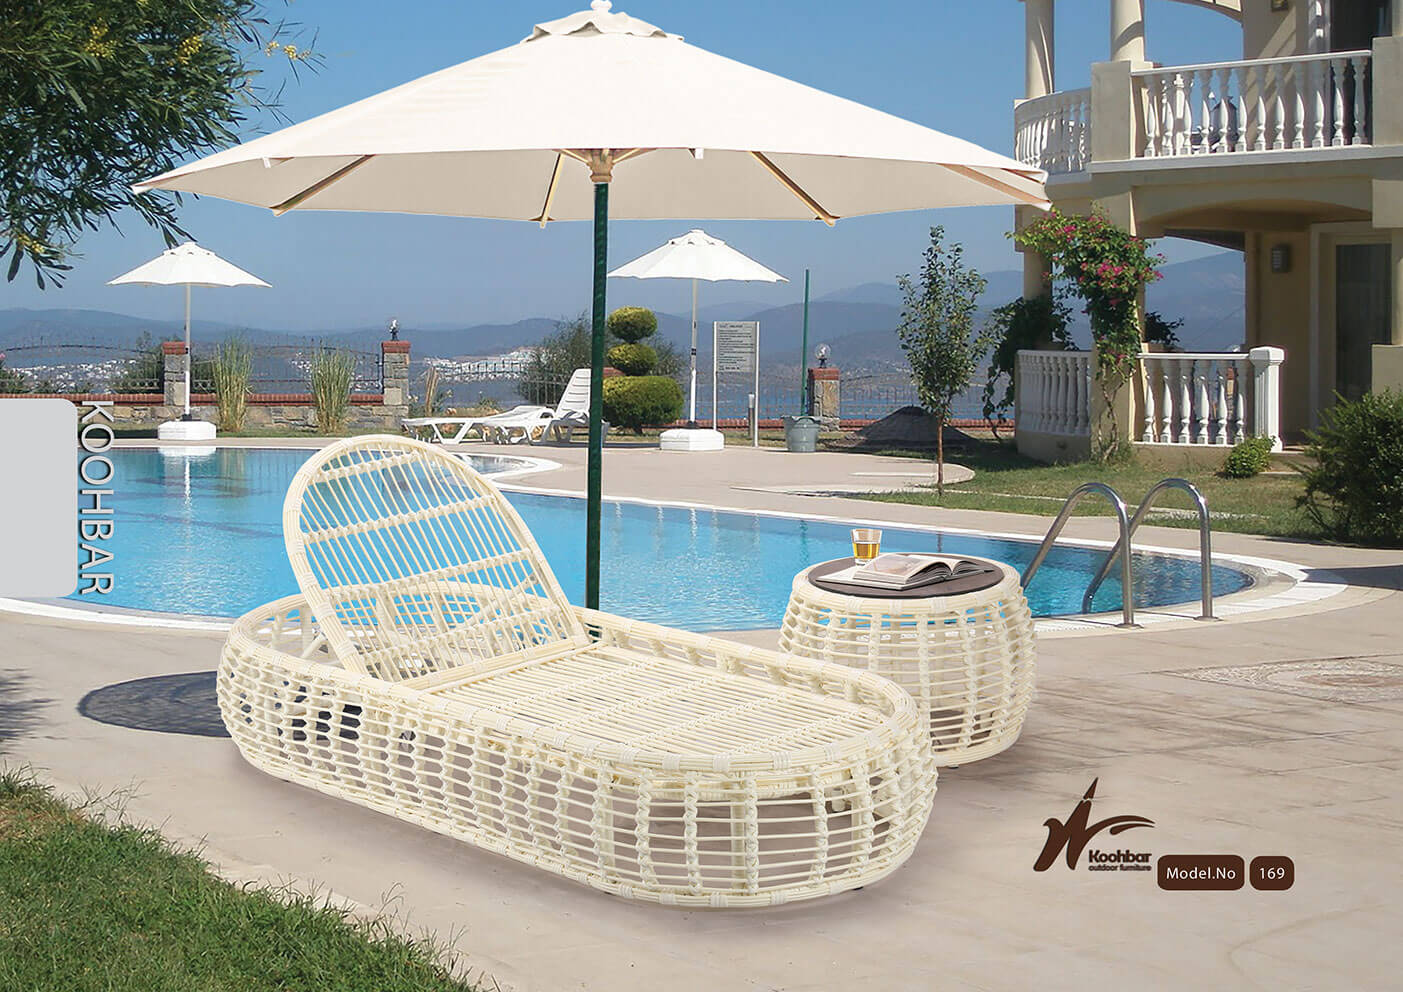 kohbar outdoor lounge chairs 169 model0 - تخت آفتابگیر حصیری کوهبر کد۱۶۹ -  - outdoor-lounge-chairs